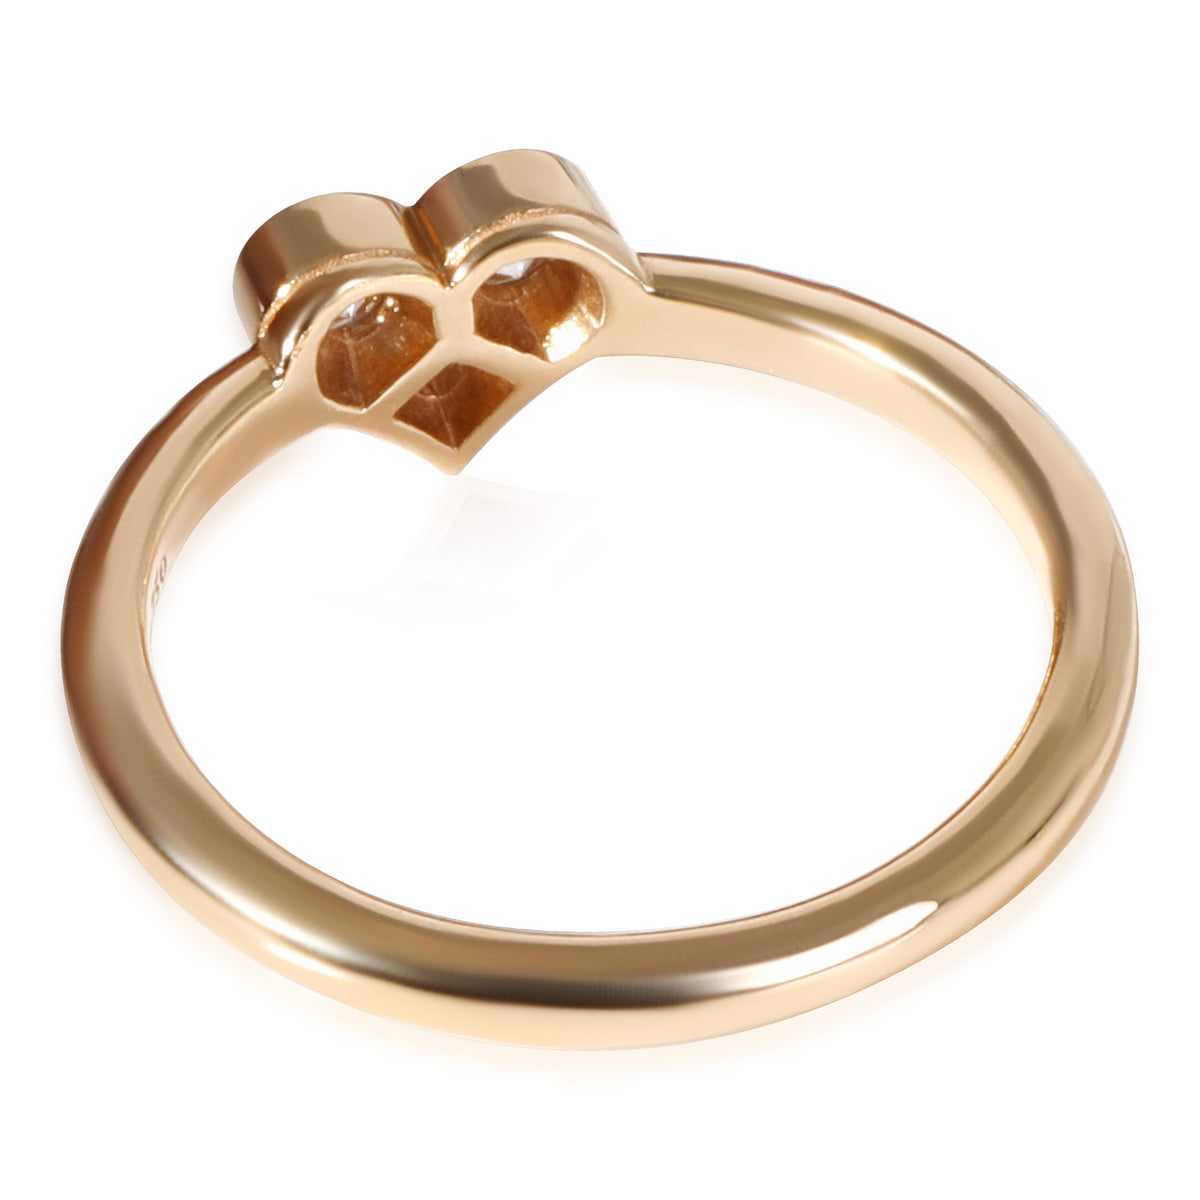 Tiffany & Co. Hearts Diamond  Ring in 18K Rose Gold 0.19 CTW